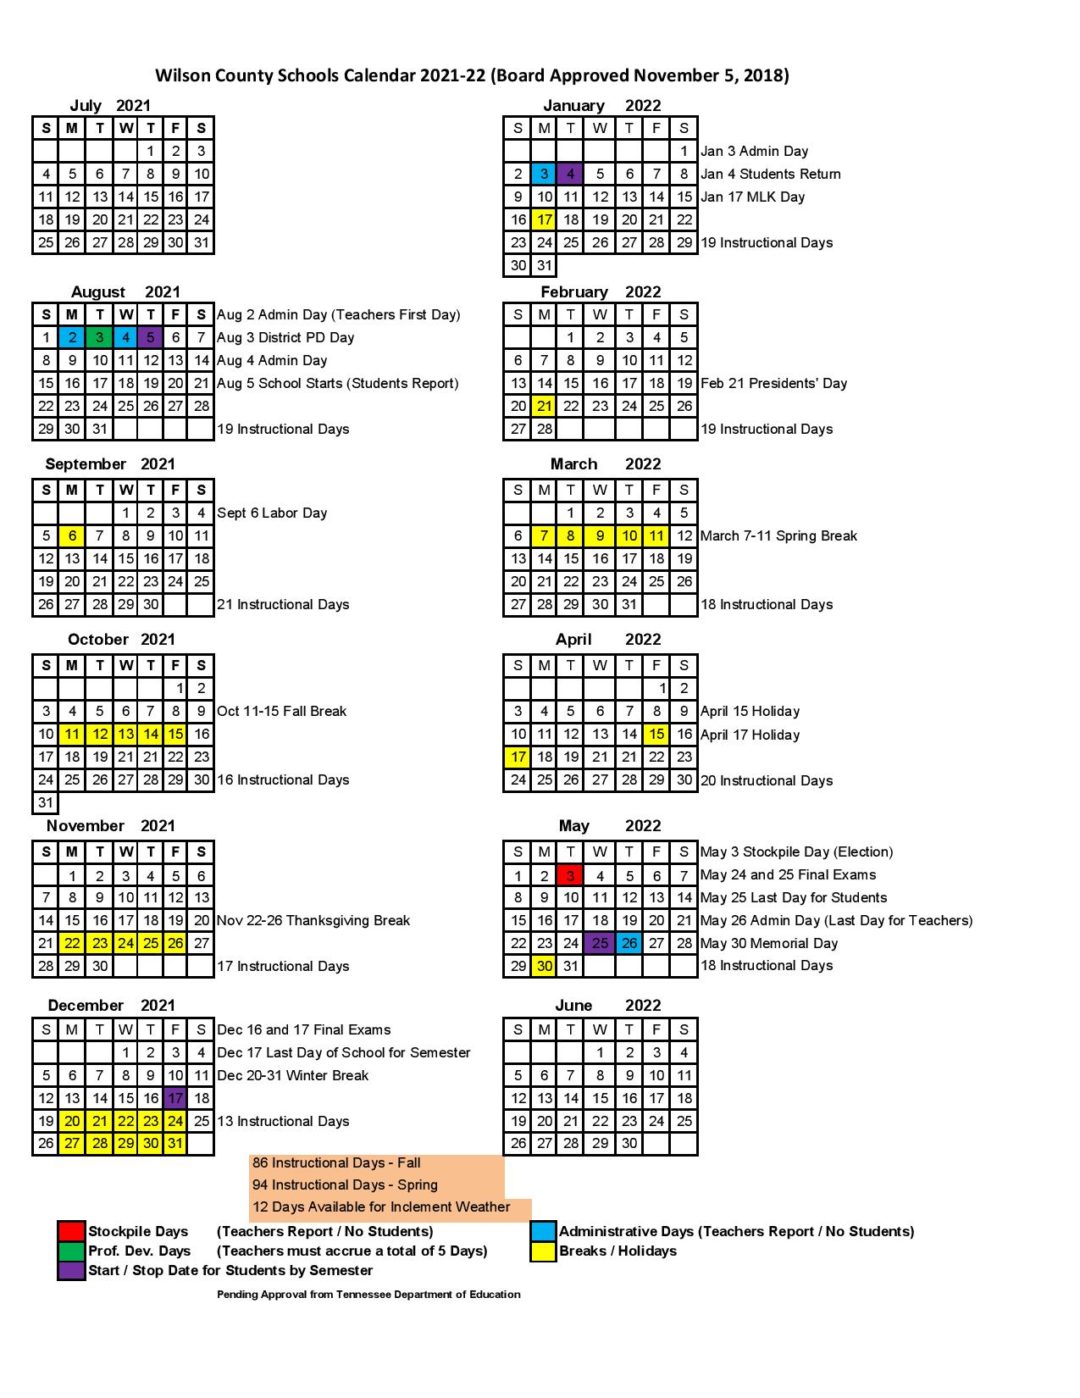 Wilson County Schools Calendar 20212022 in PDF